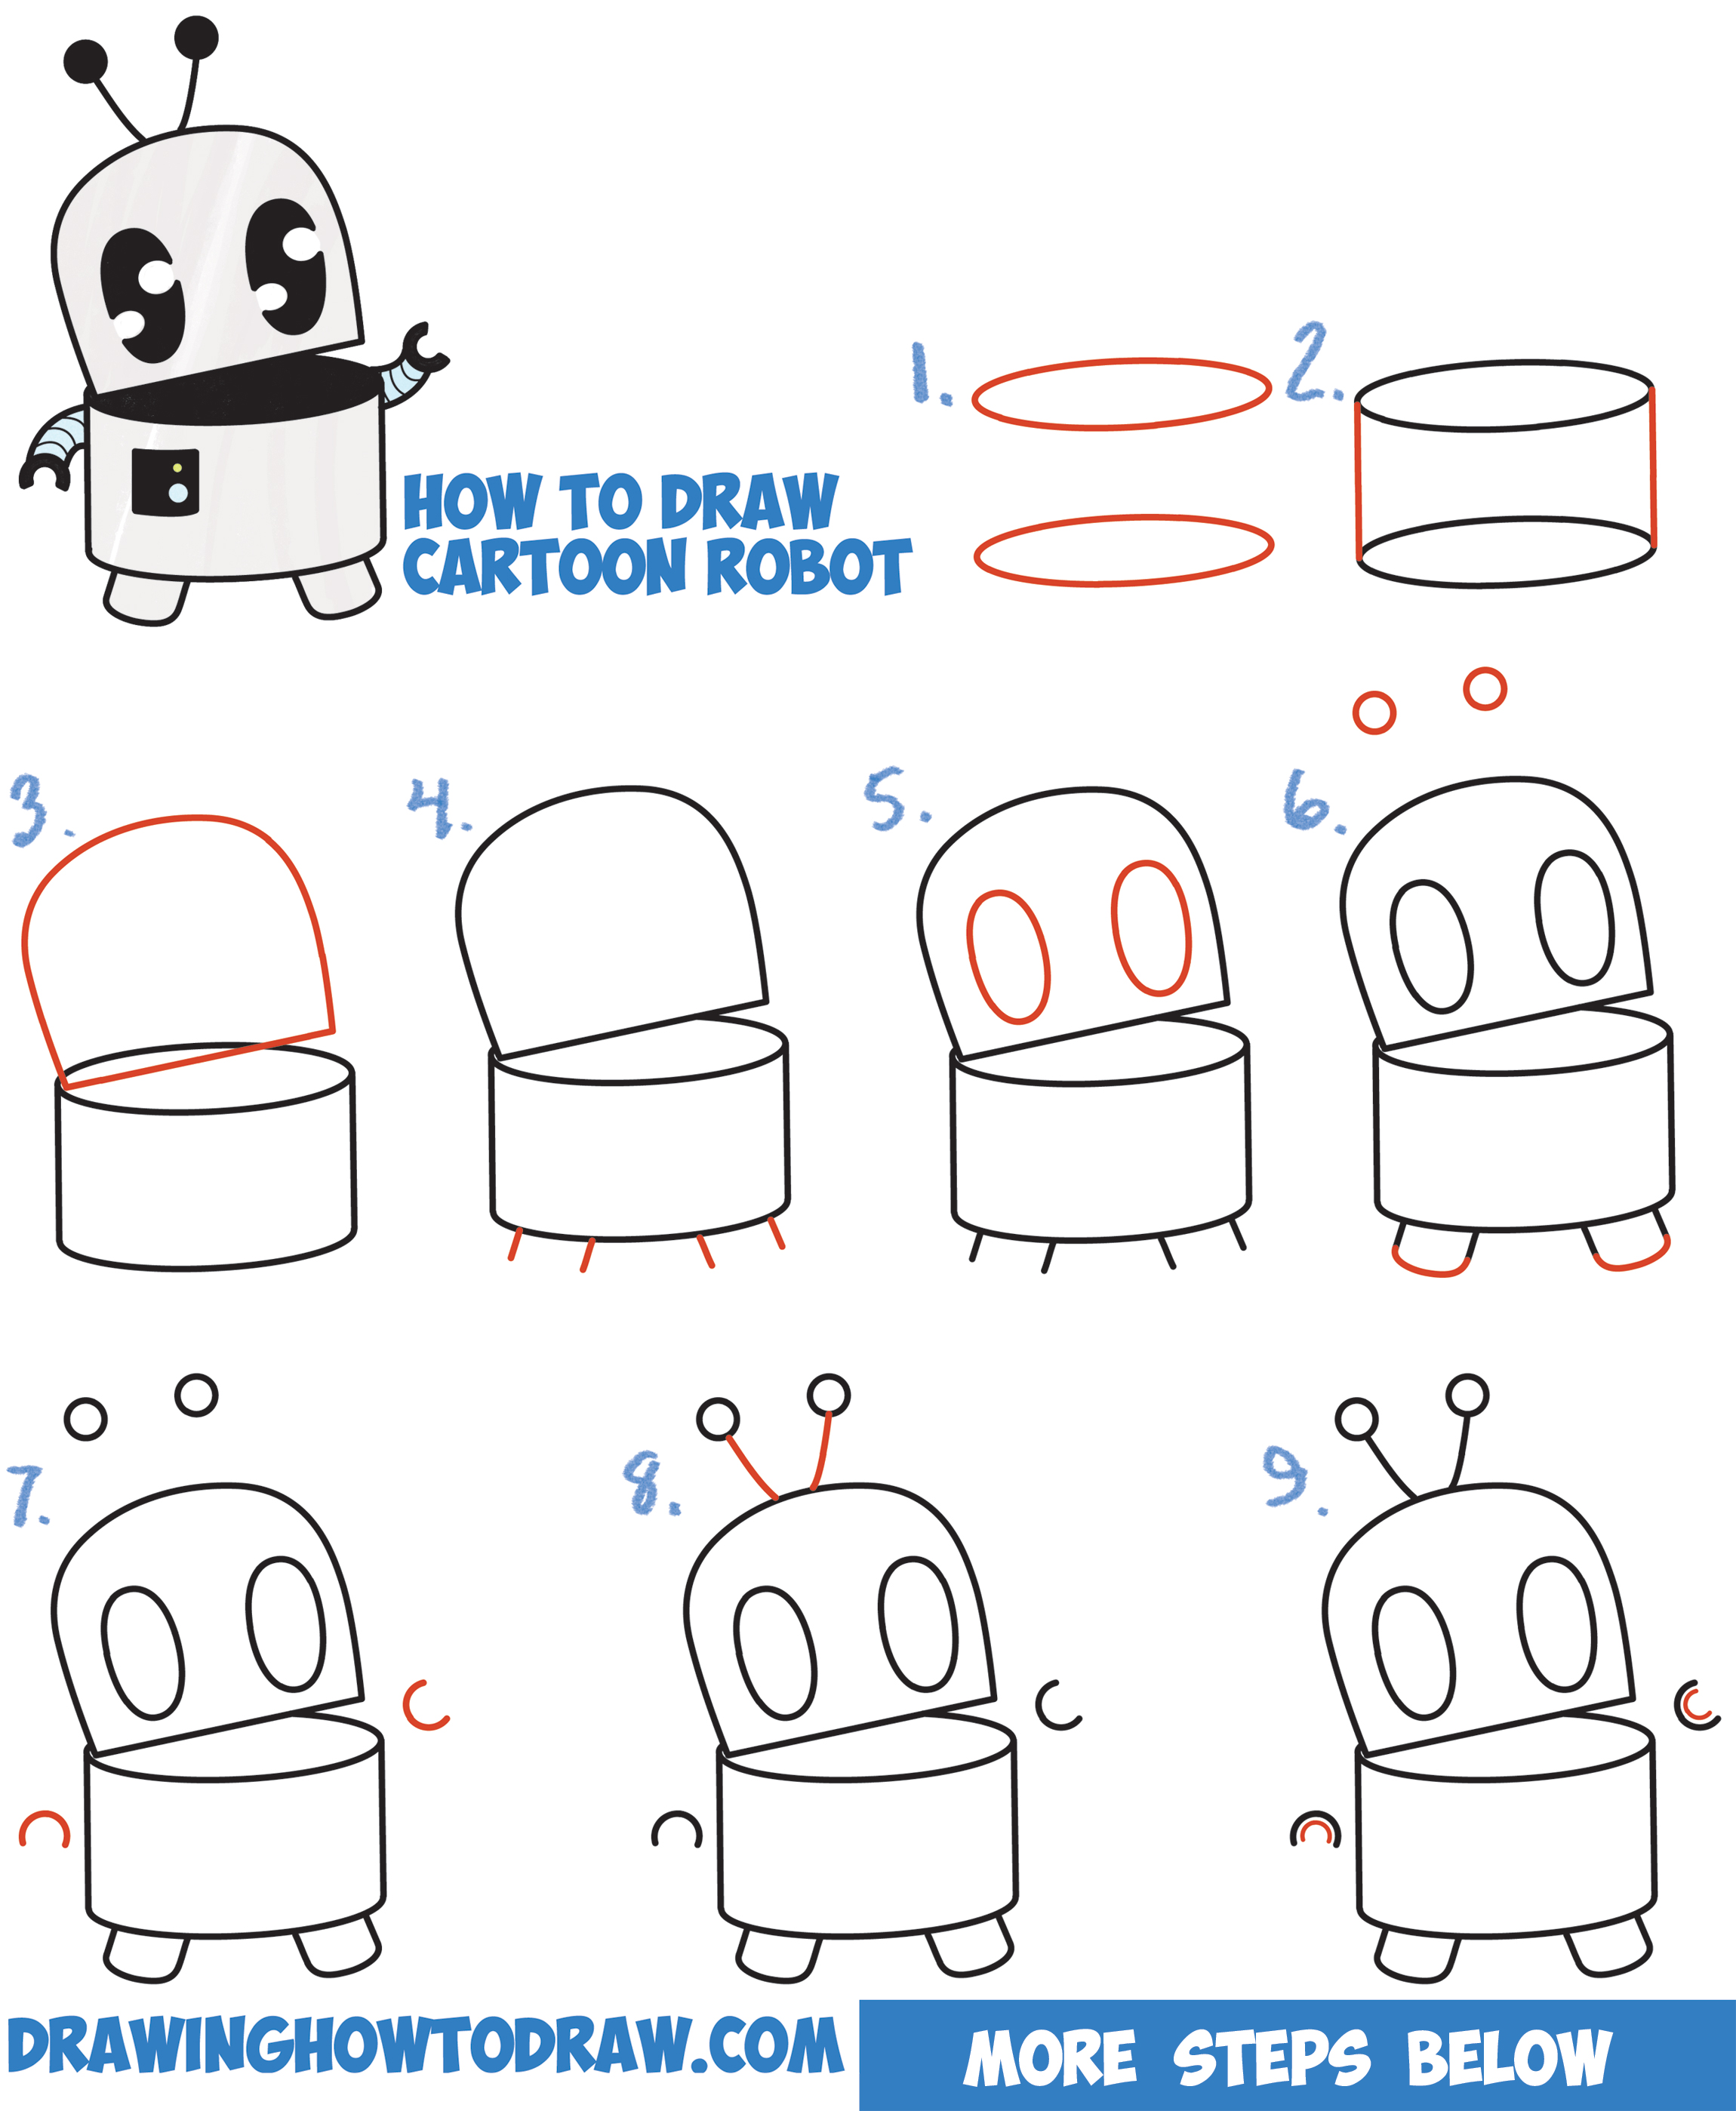 Future robot robotics Cut Out Stock Images & Pictures - Page 3 - Alamy